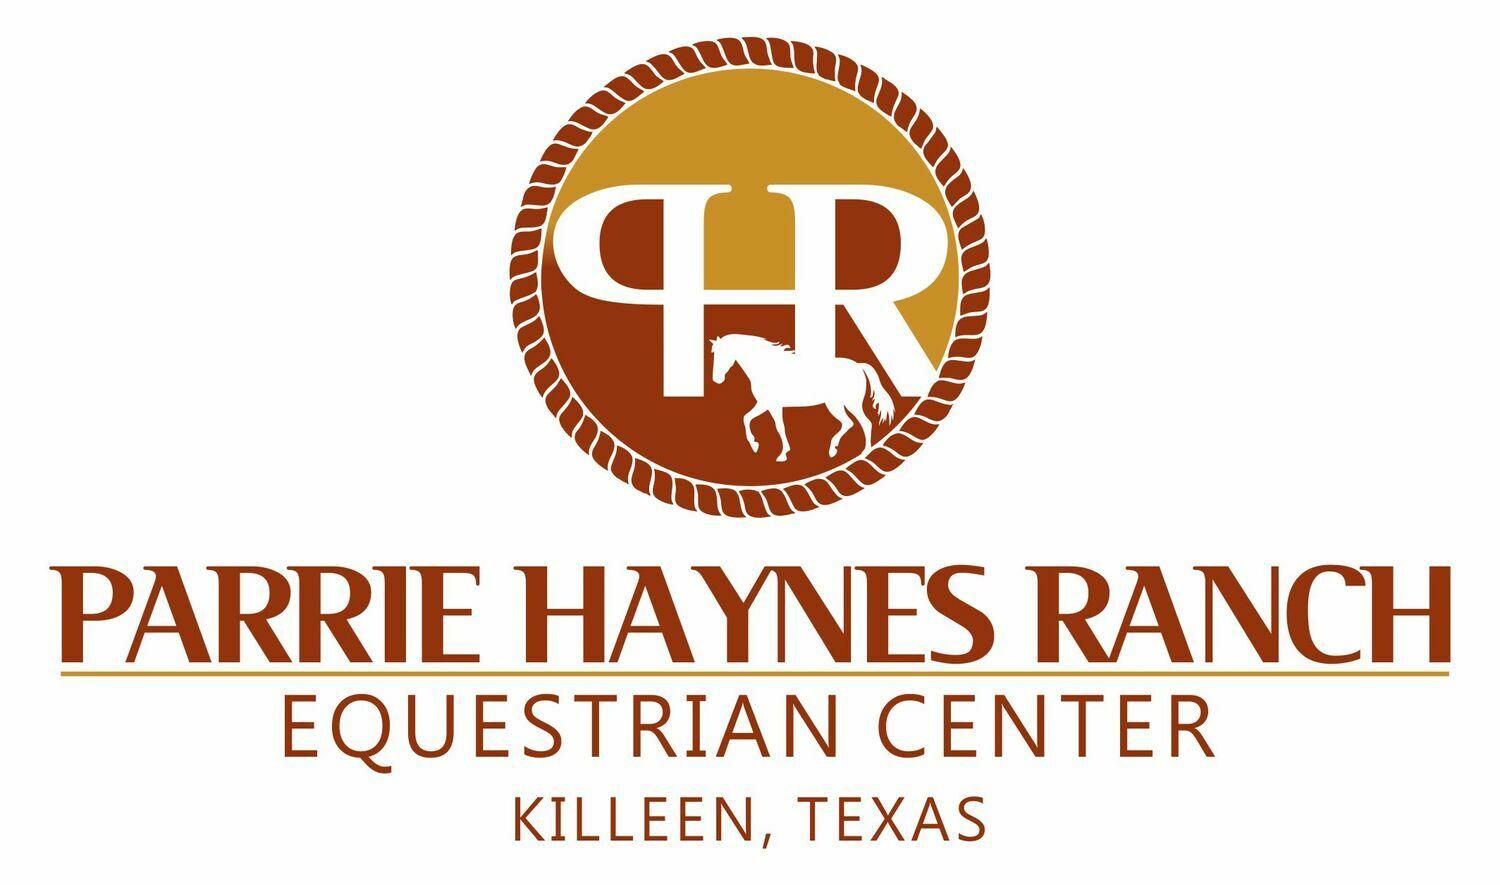 Parrie Haynes Equestrian Center